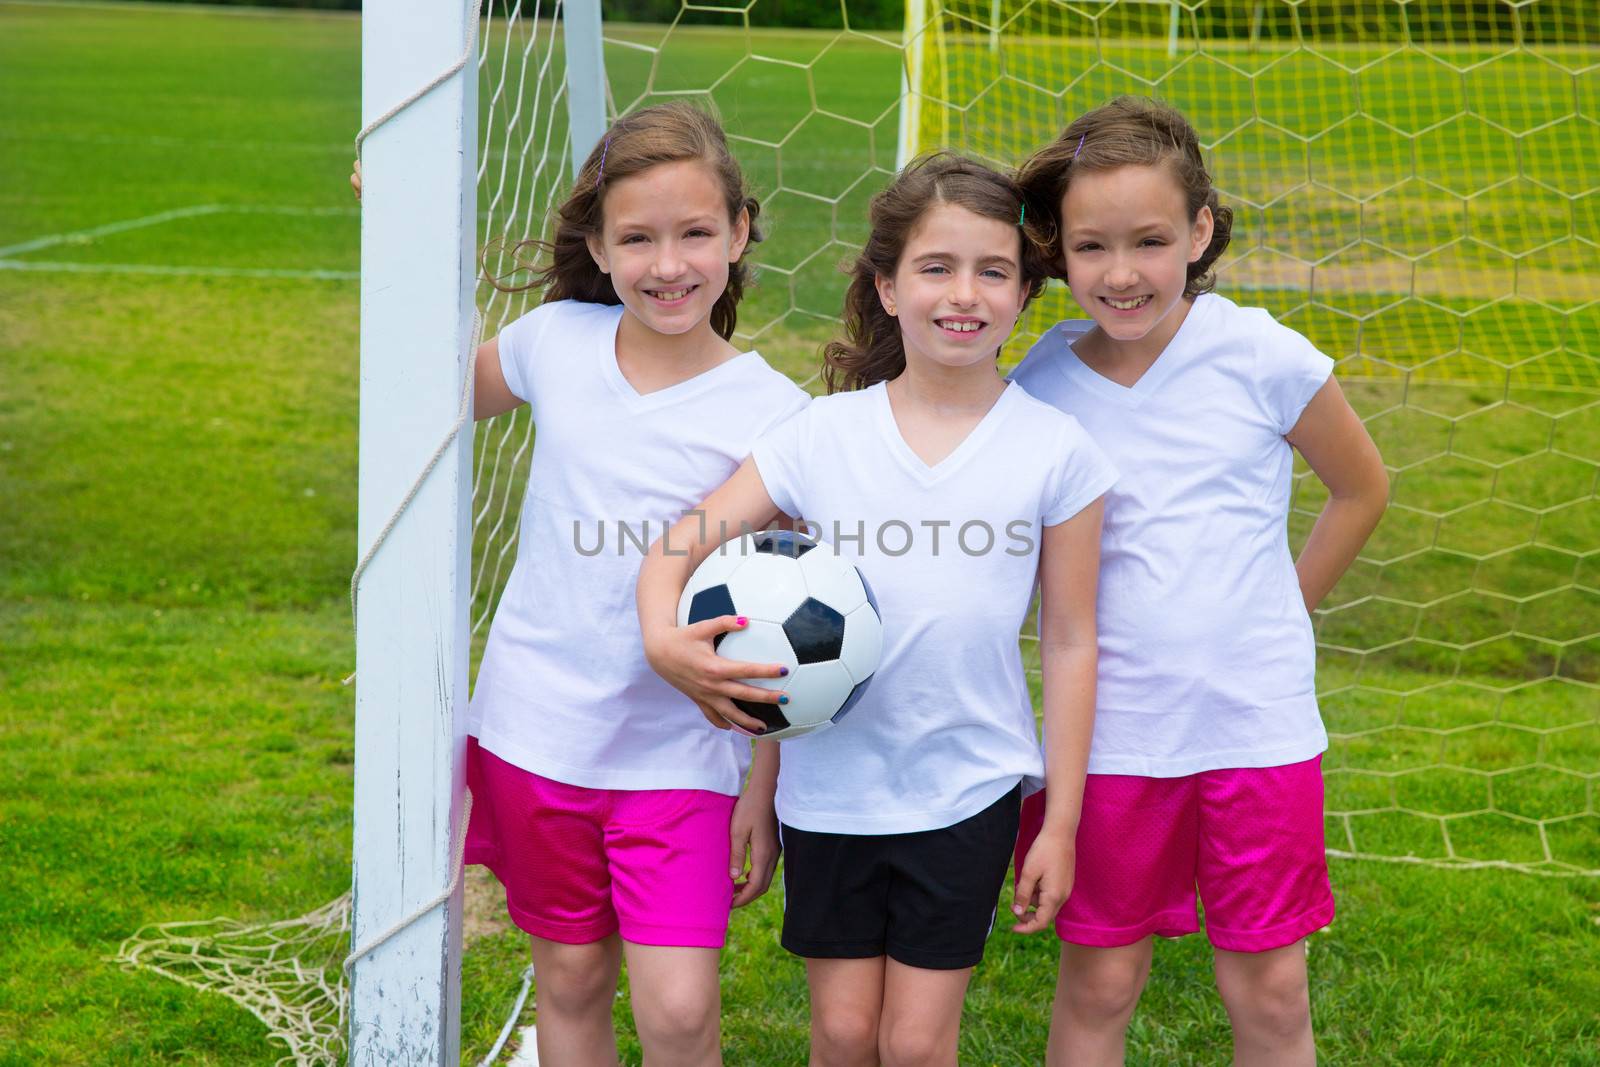 Soccer football kid girls team at sports fileld by lunamarina